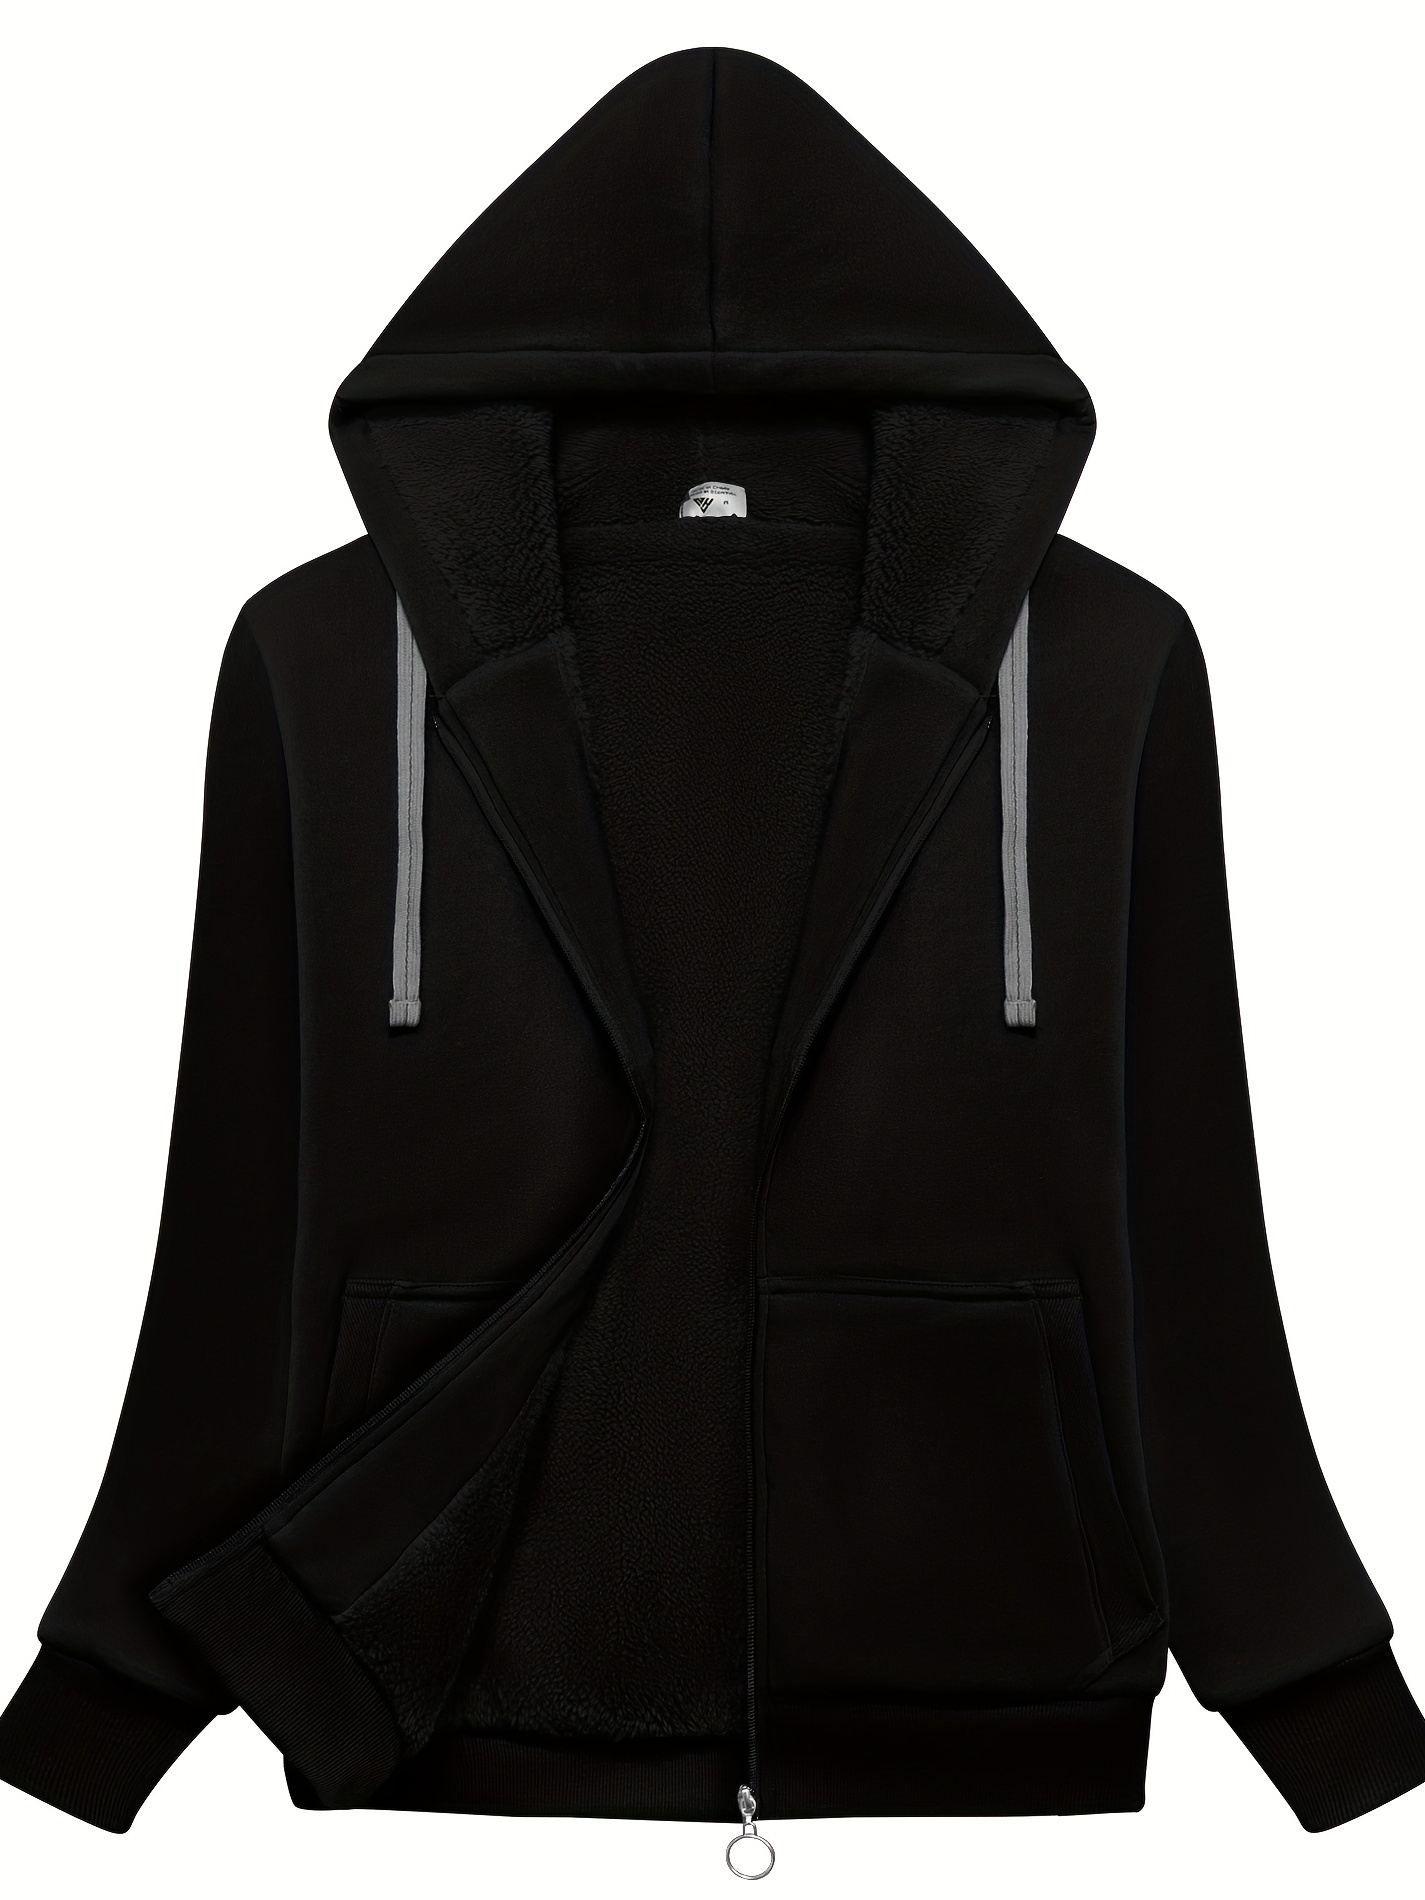 CKLC Women's Hoodie Drawstring Hood Thin Fleece Lined Jacket with Pocket Front Zipper 3XL Black